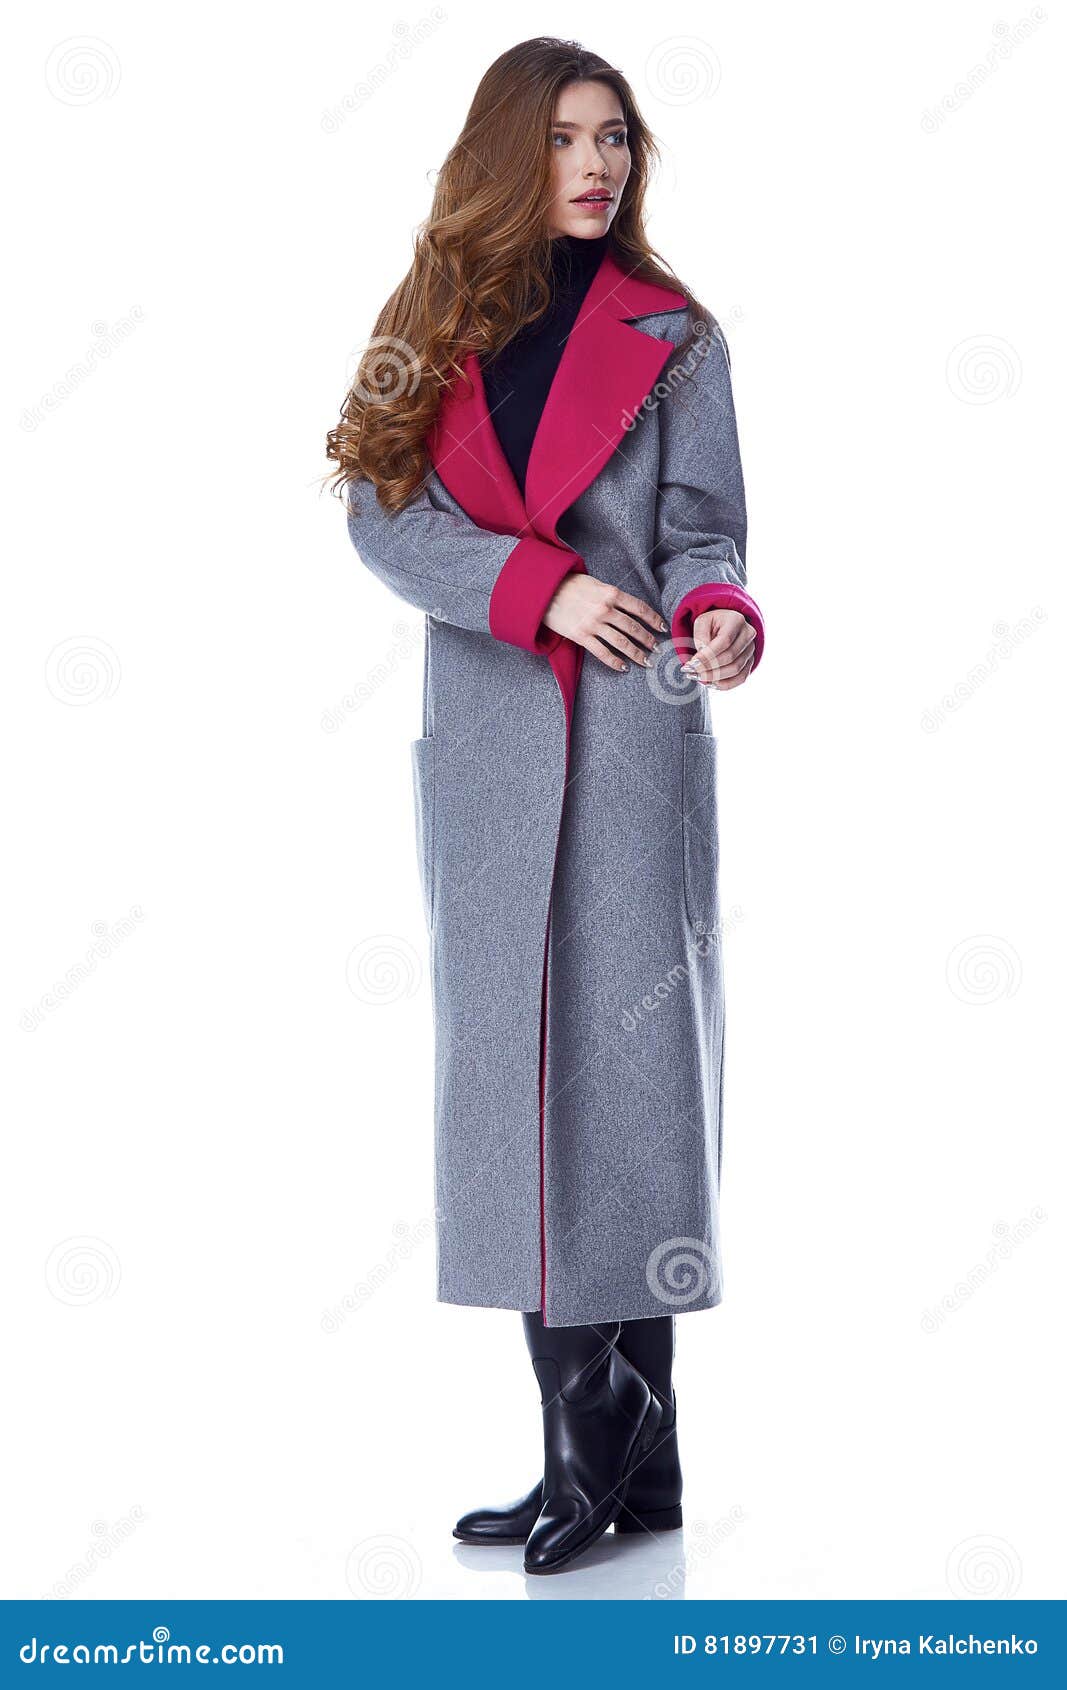 Beauty Business Woman Model Wear Stylish Design Stock Image - Image of ...